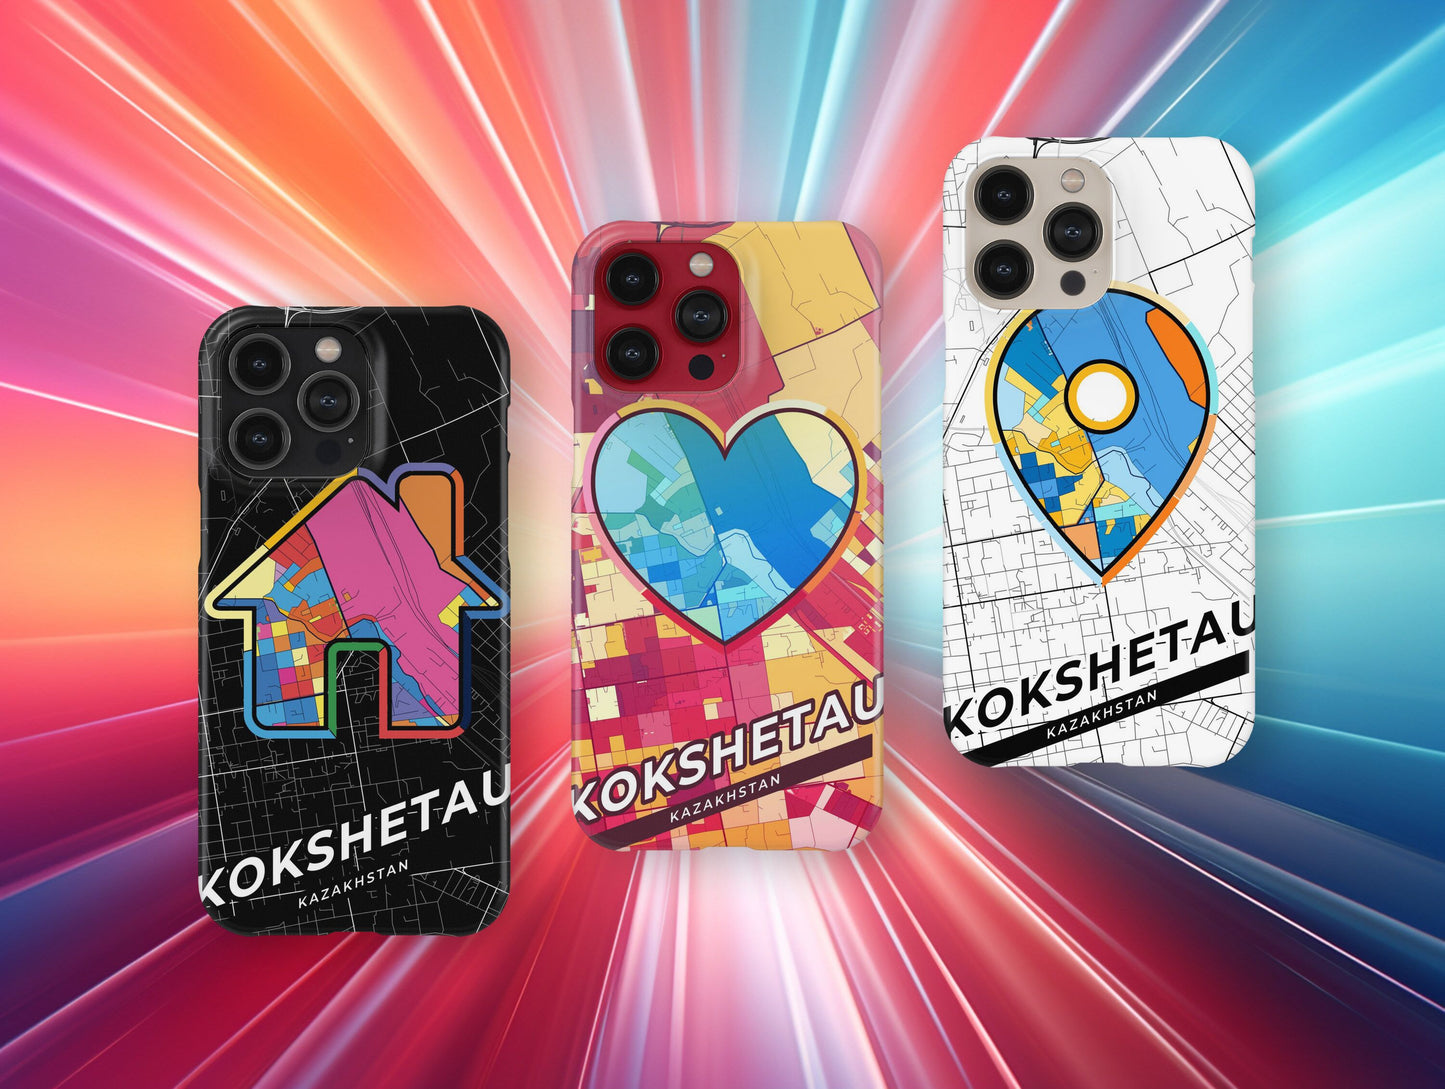 Kokshetau Kazakhstan slim phone case with colorful icon. Birthday, wedding or housewarming gift. Couple match cases.